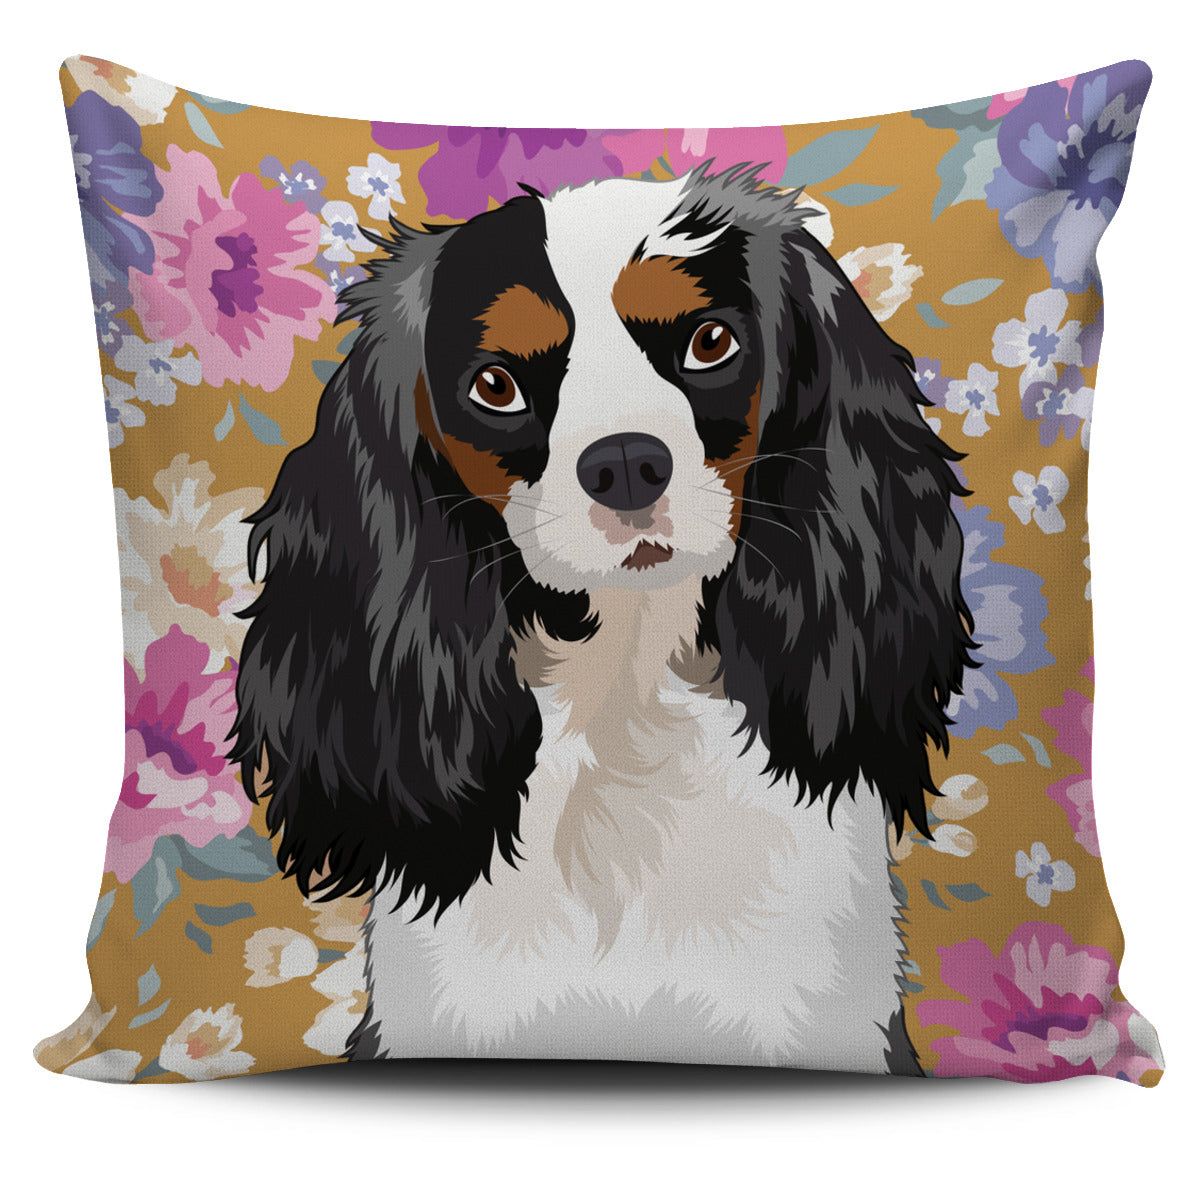 King Charles Spaniel Dog Portrait Pillow Cover